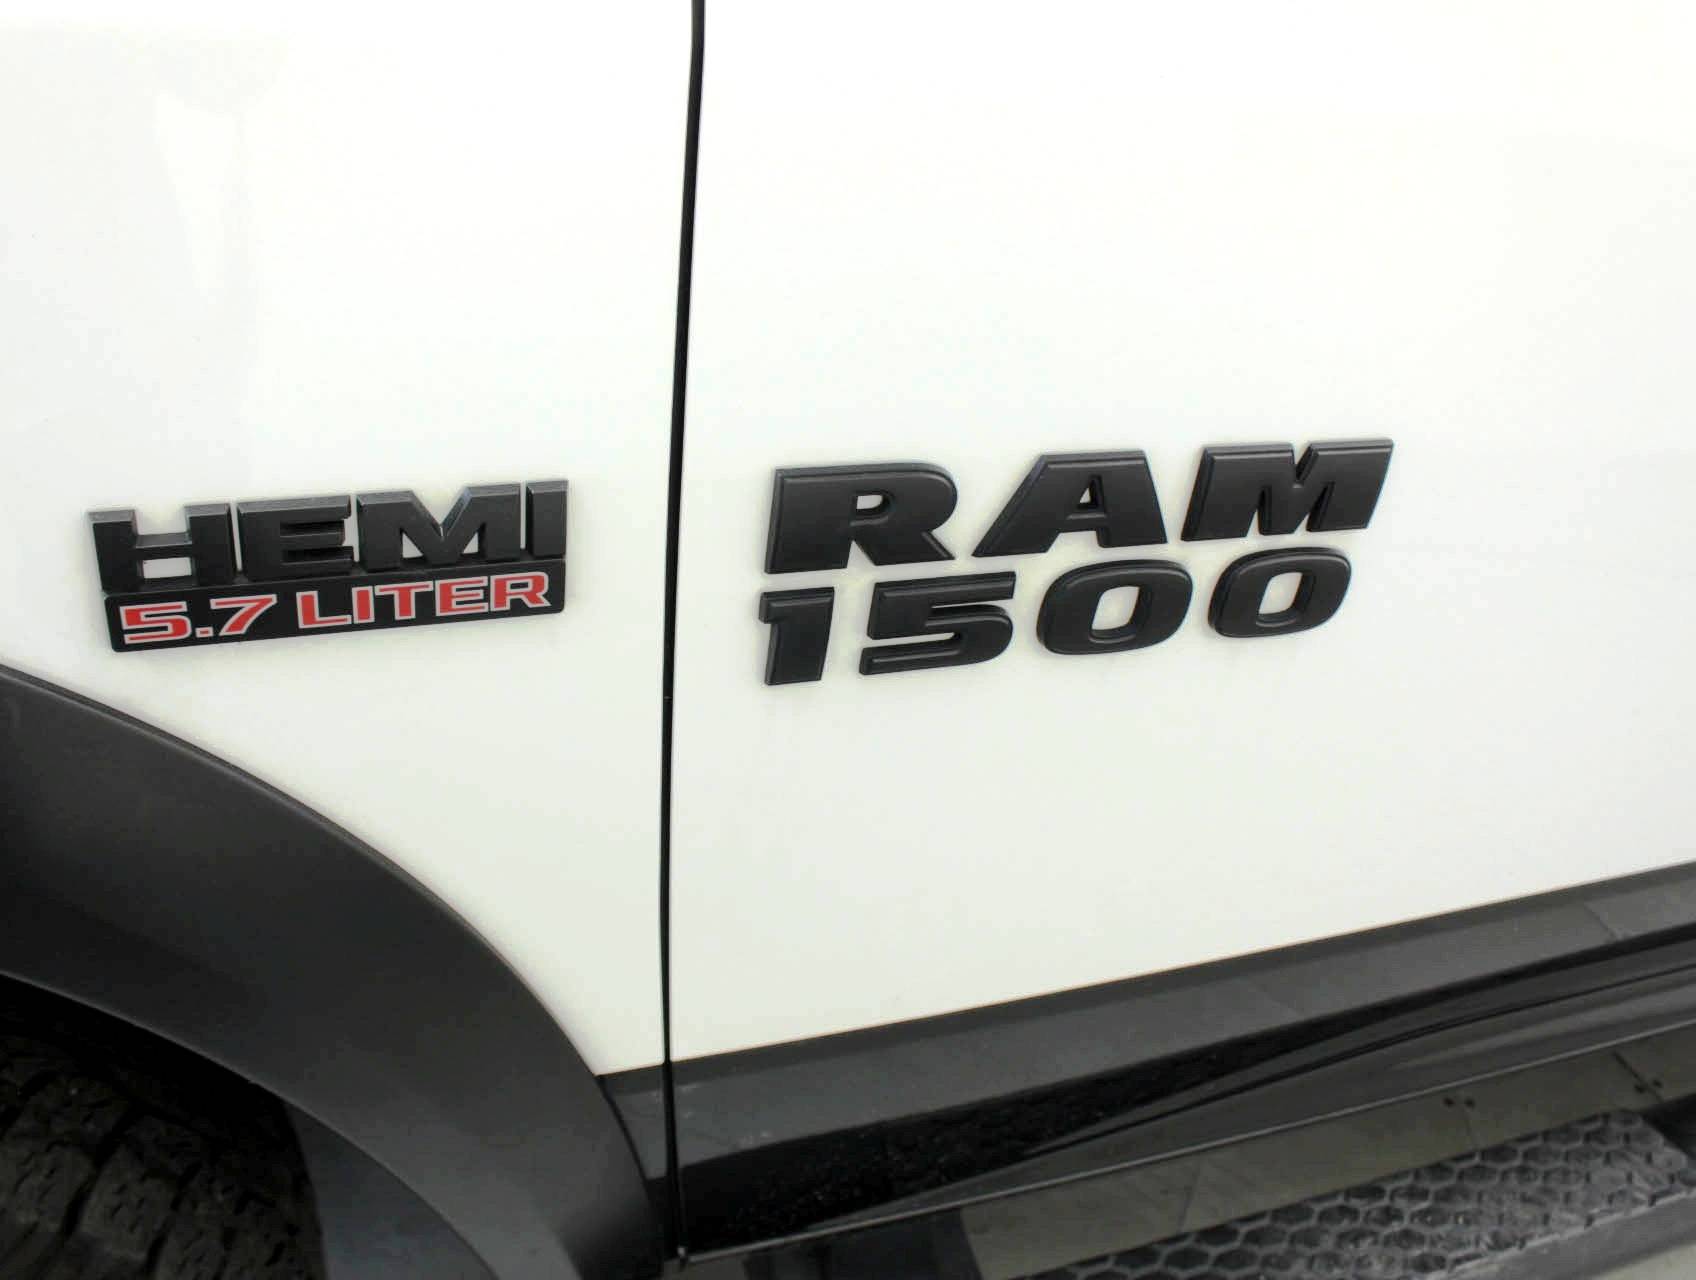 Florida Fine Cars - Used RAM 1500 2017 WEST PALM Rebel 4x4